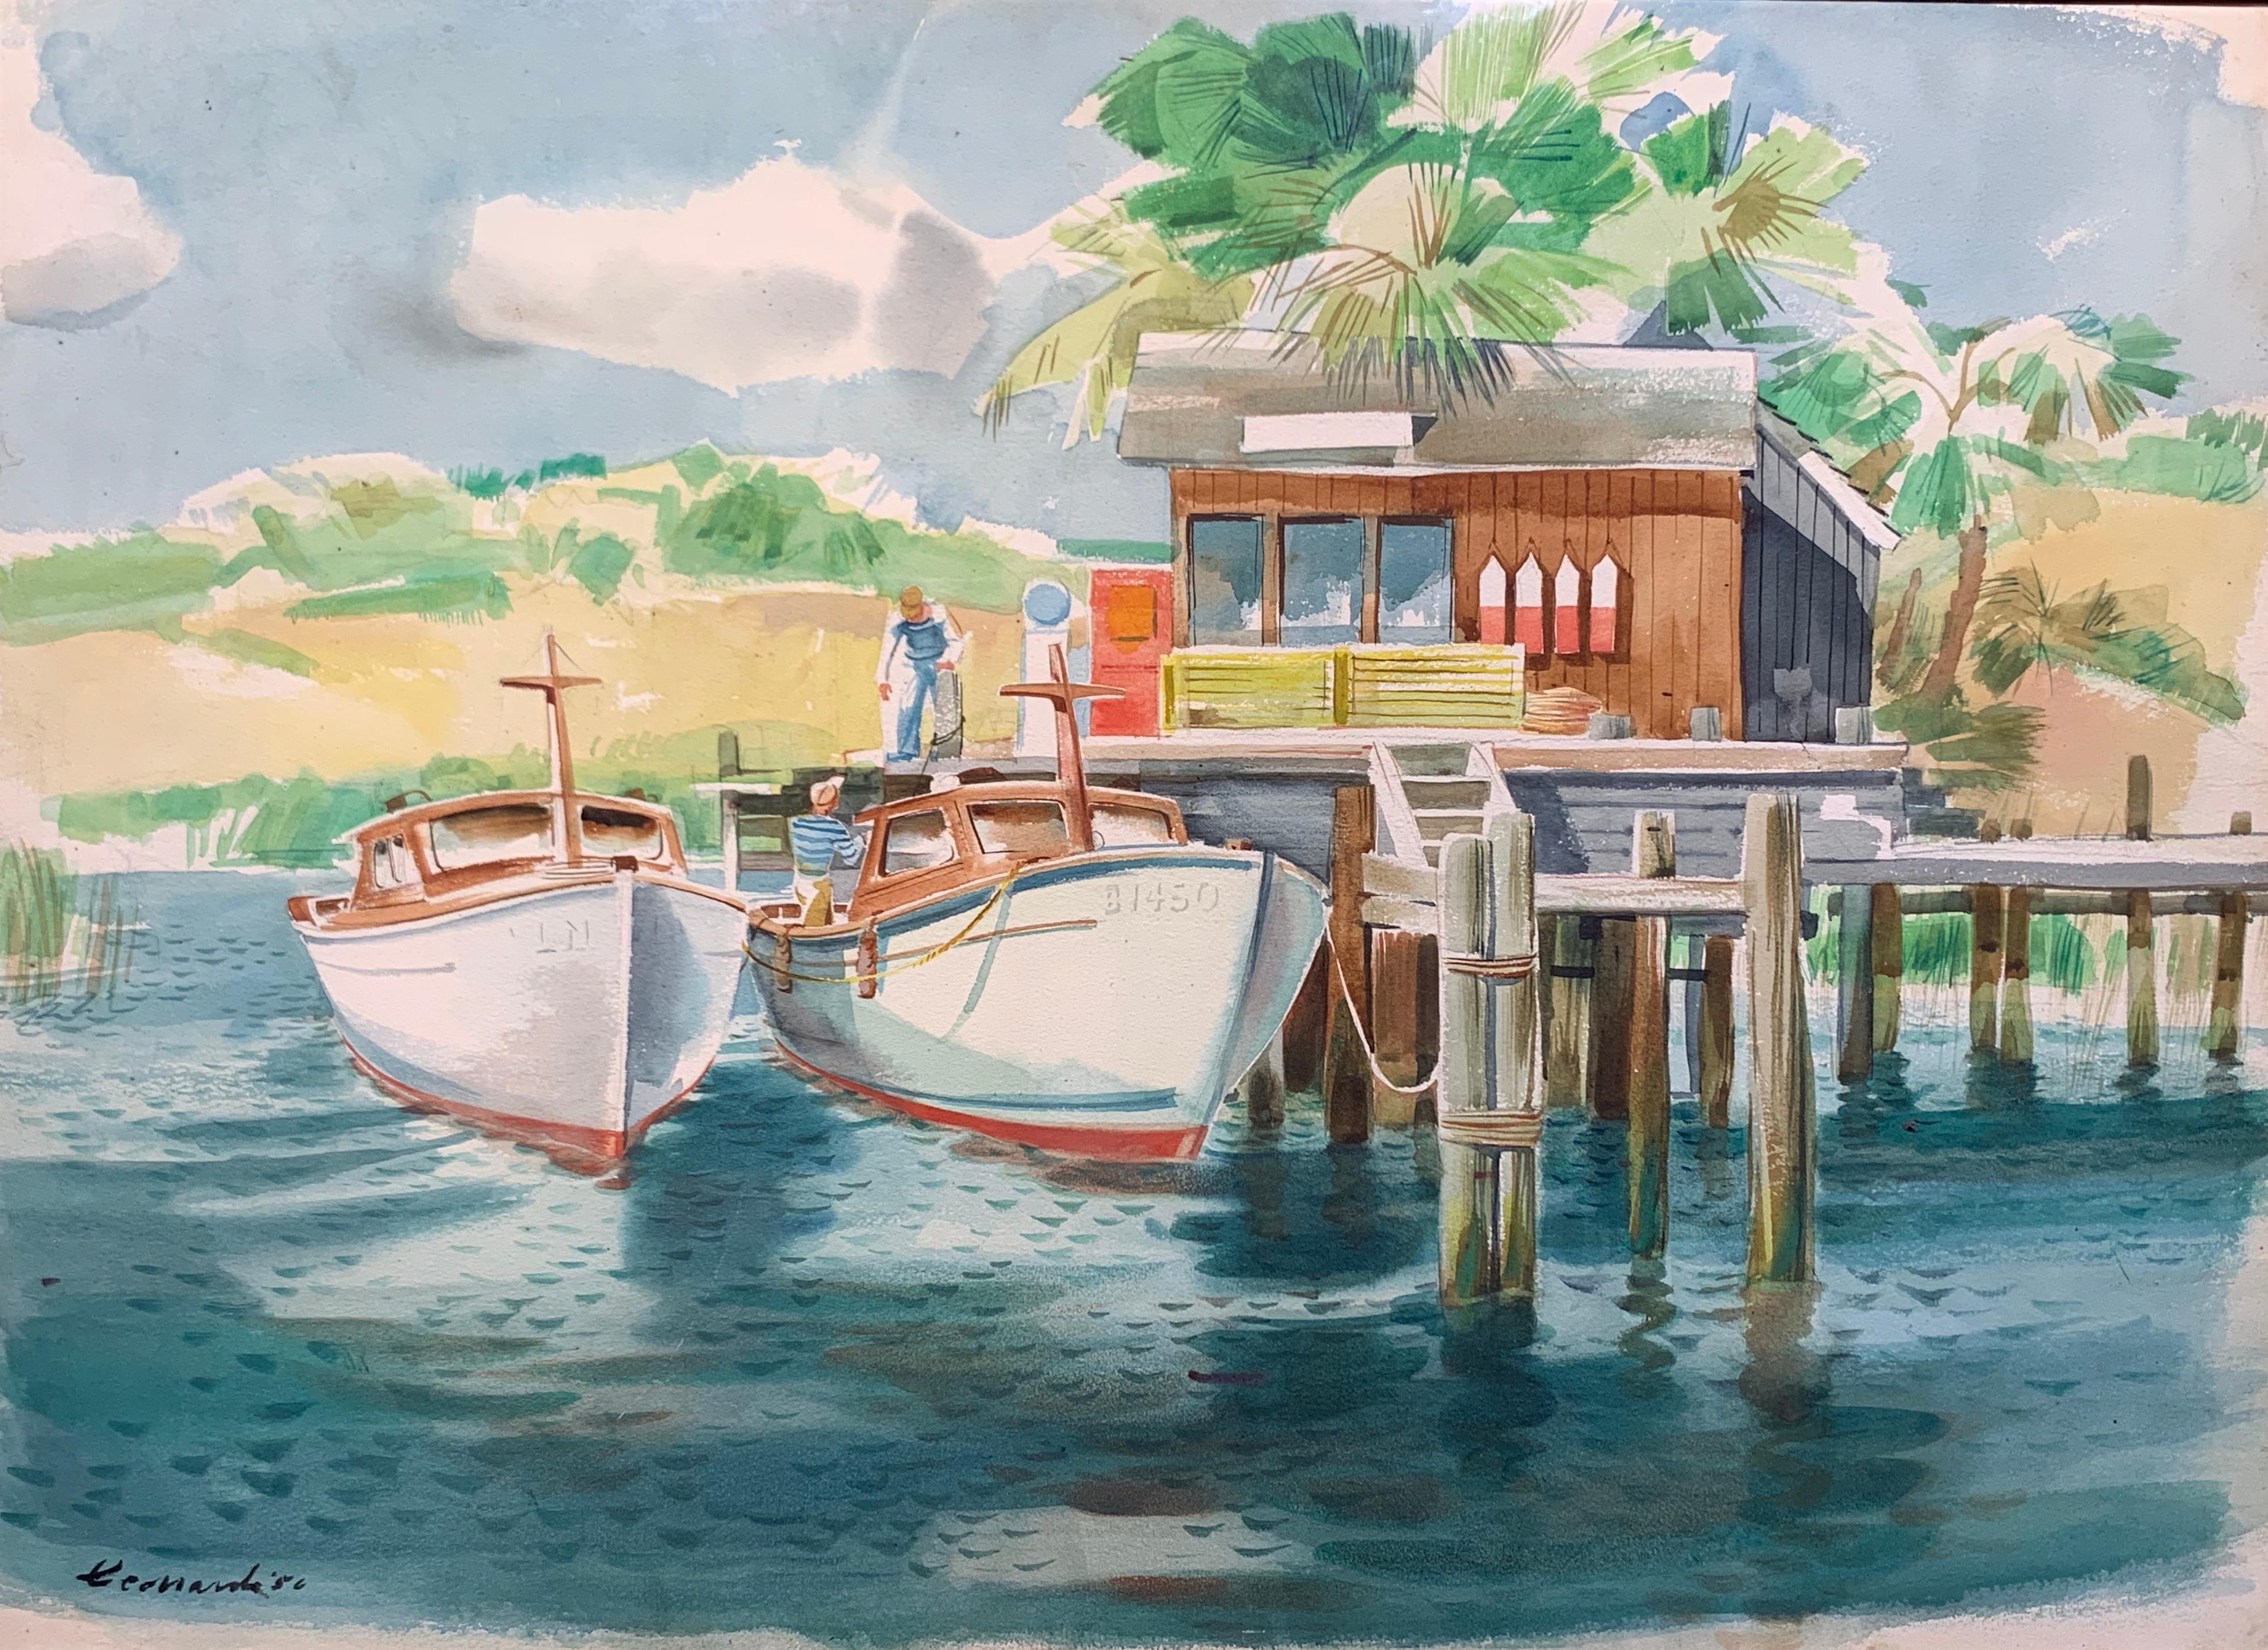 Jack DeCoudres Leonard Landscape Painting - Tropical Fishing Boats